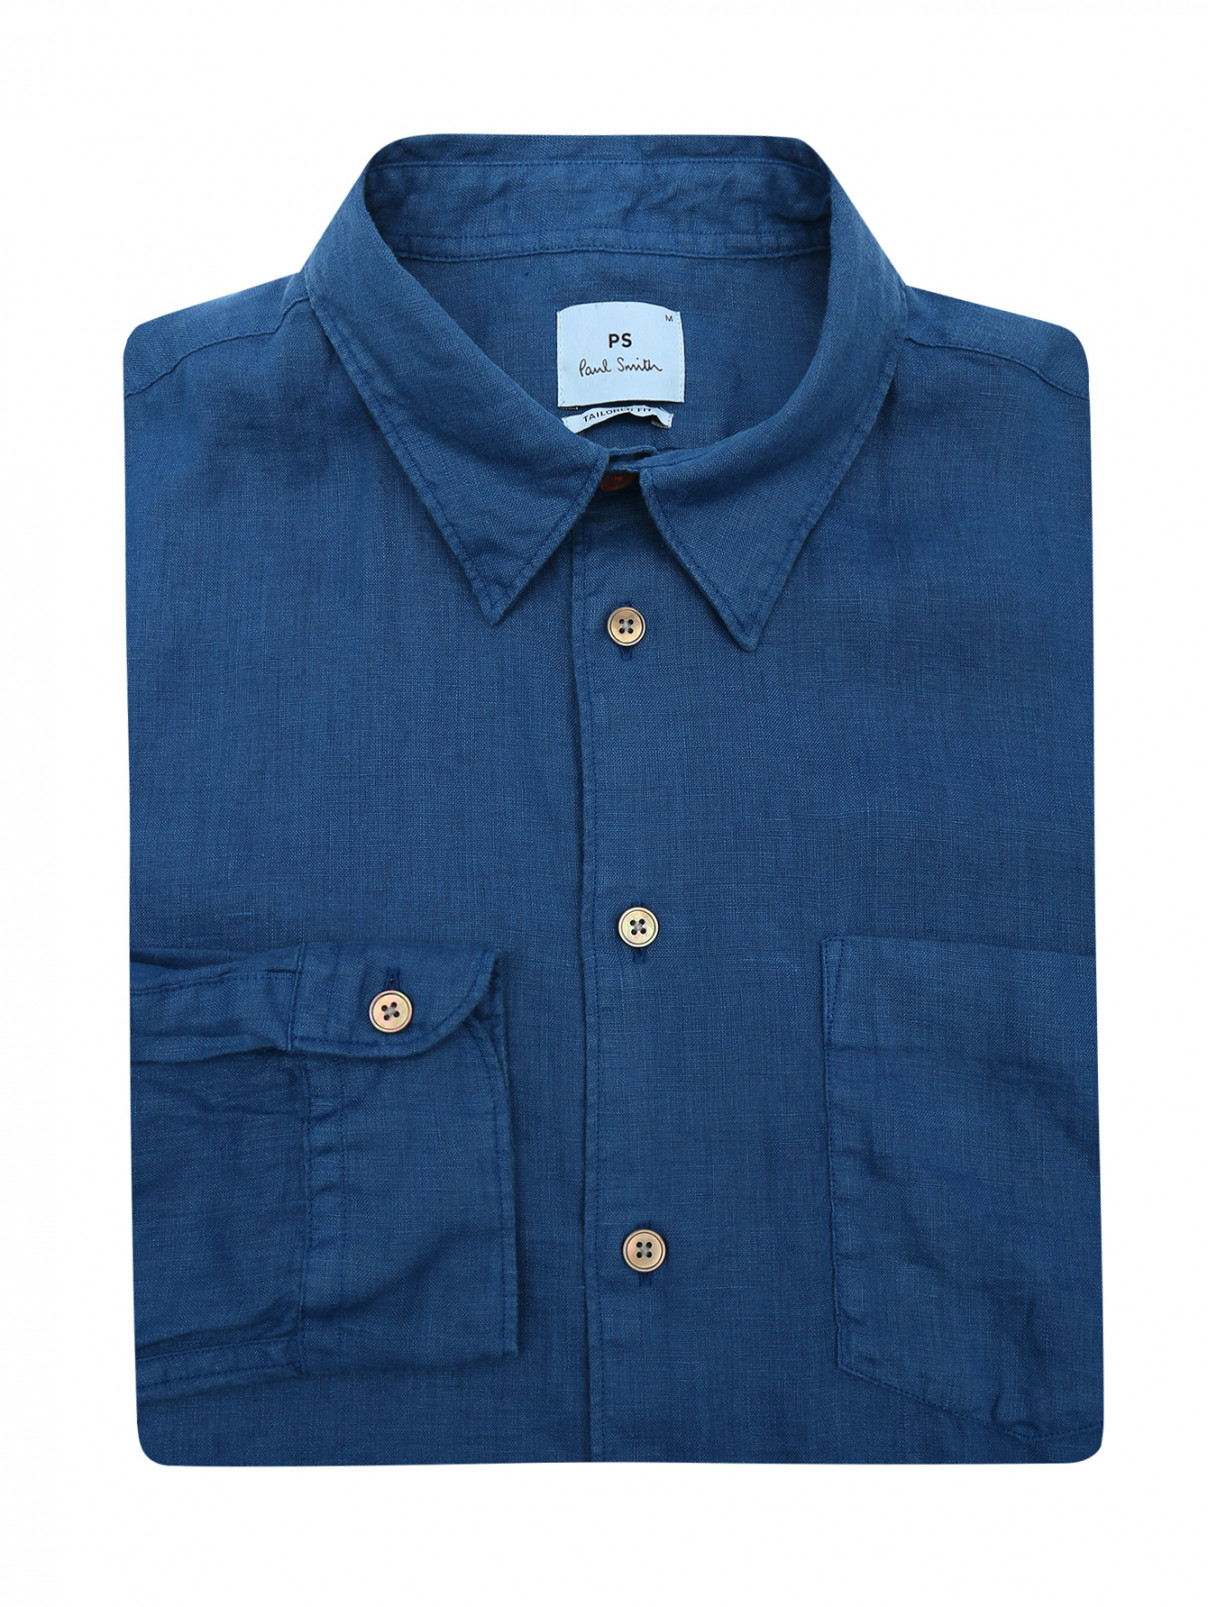 Рубашка из льна Paul Smith  –  Общий вид  – Цвет:  Синий